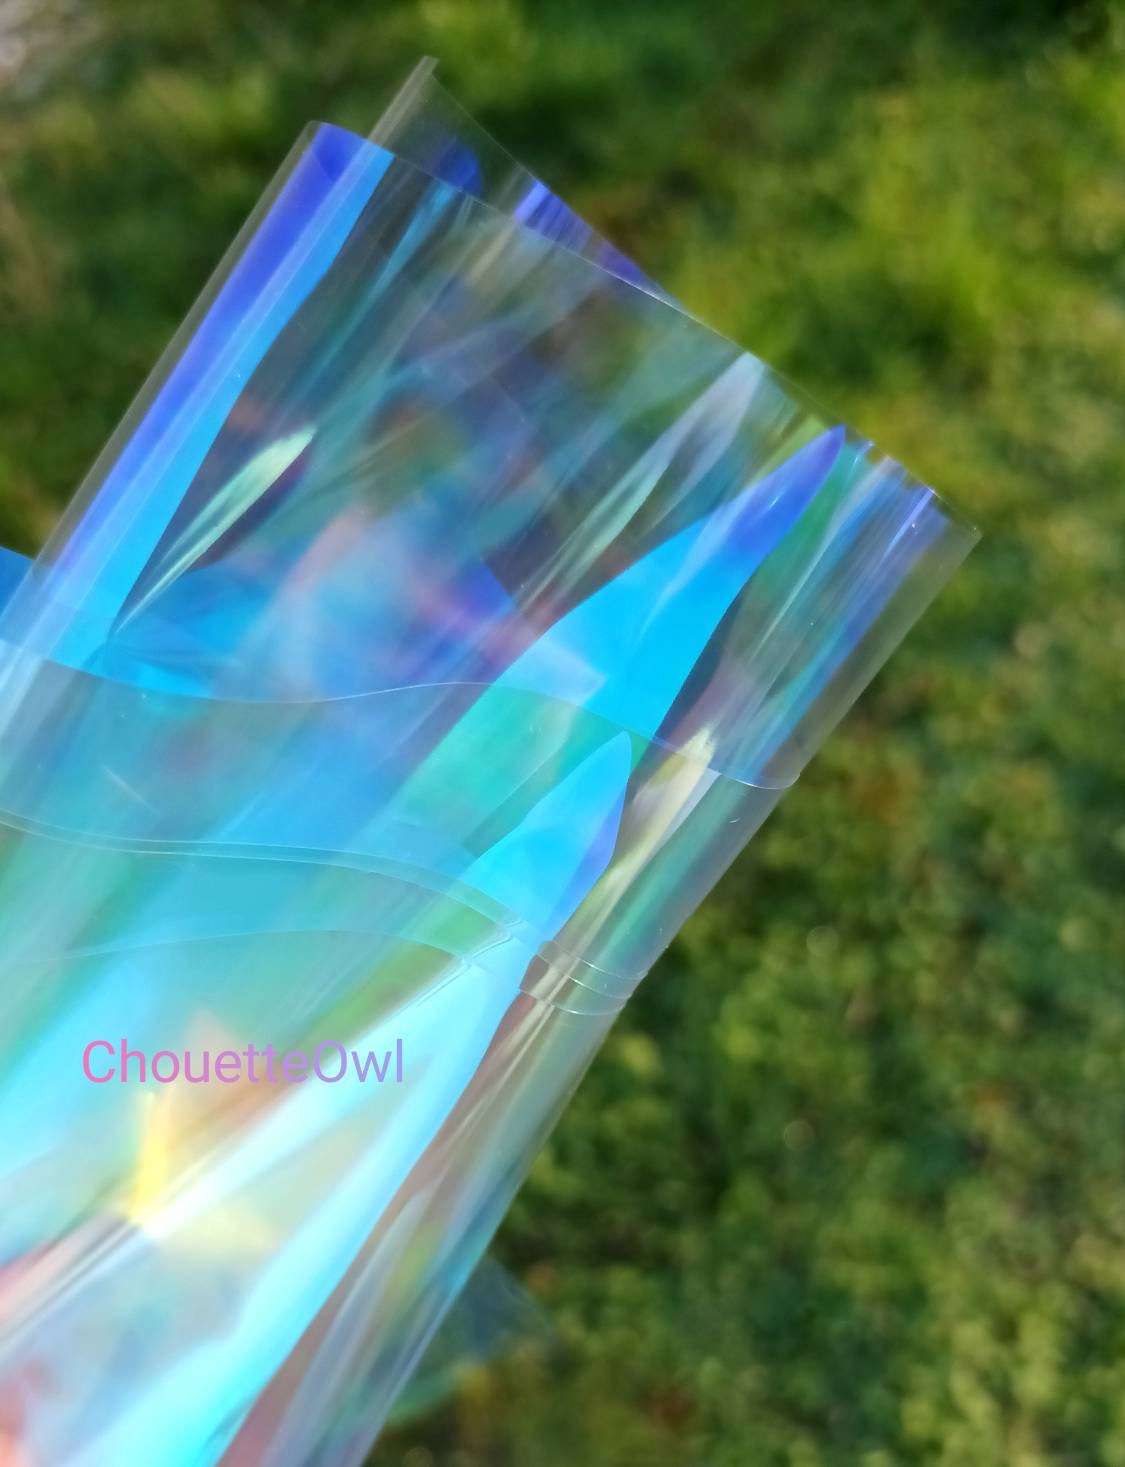 Rainbow Holographic Transparent PVC Vinyl Fabric Iridescent TPU